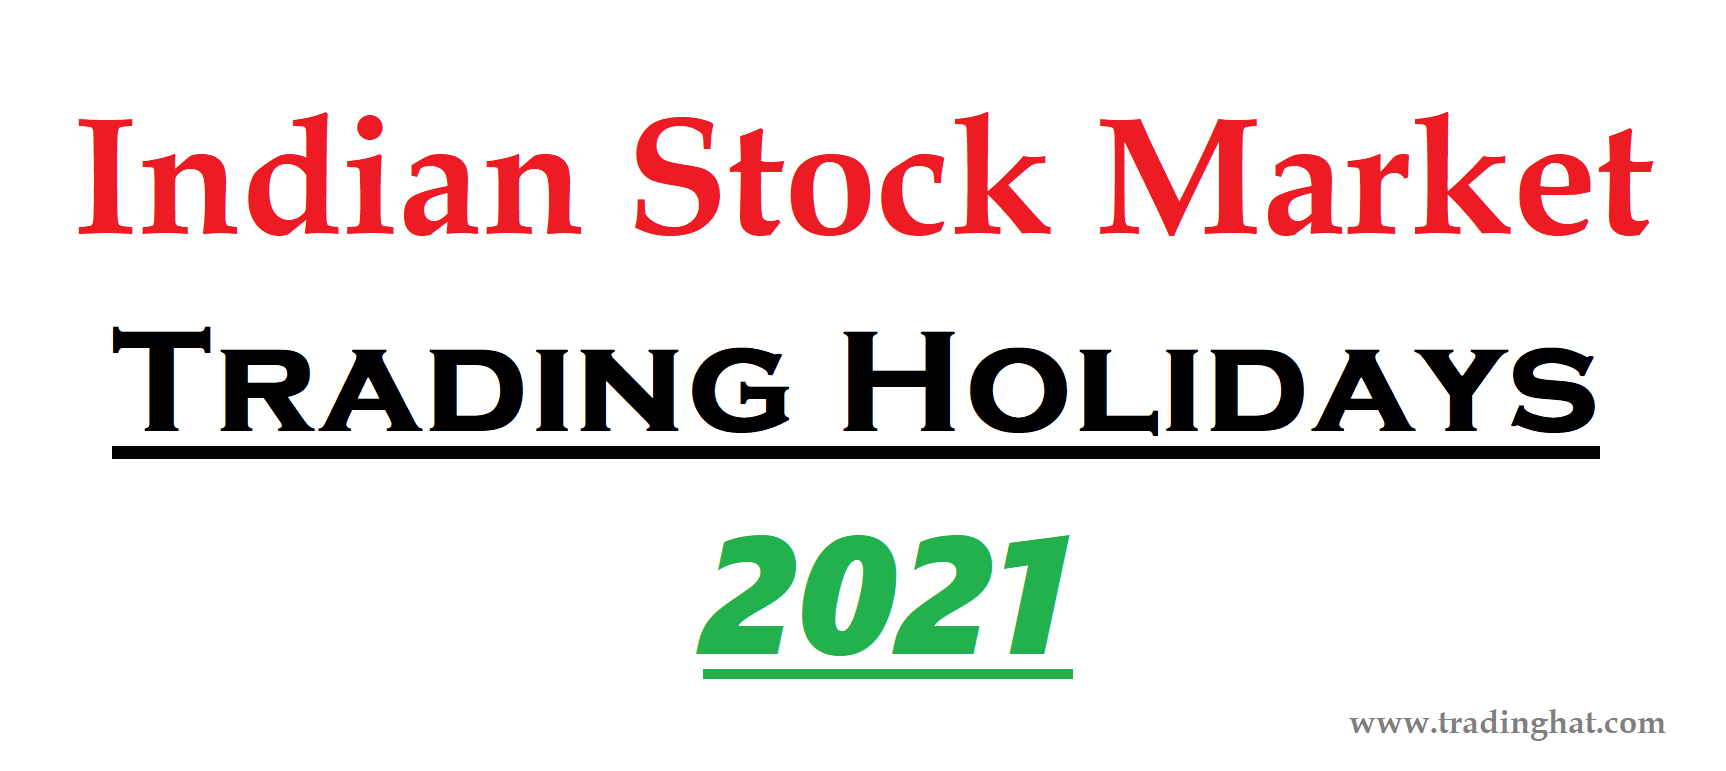 Stock Market Trading Holidays 2021 - India